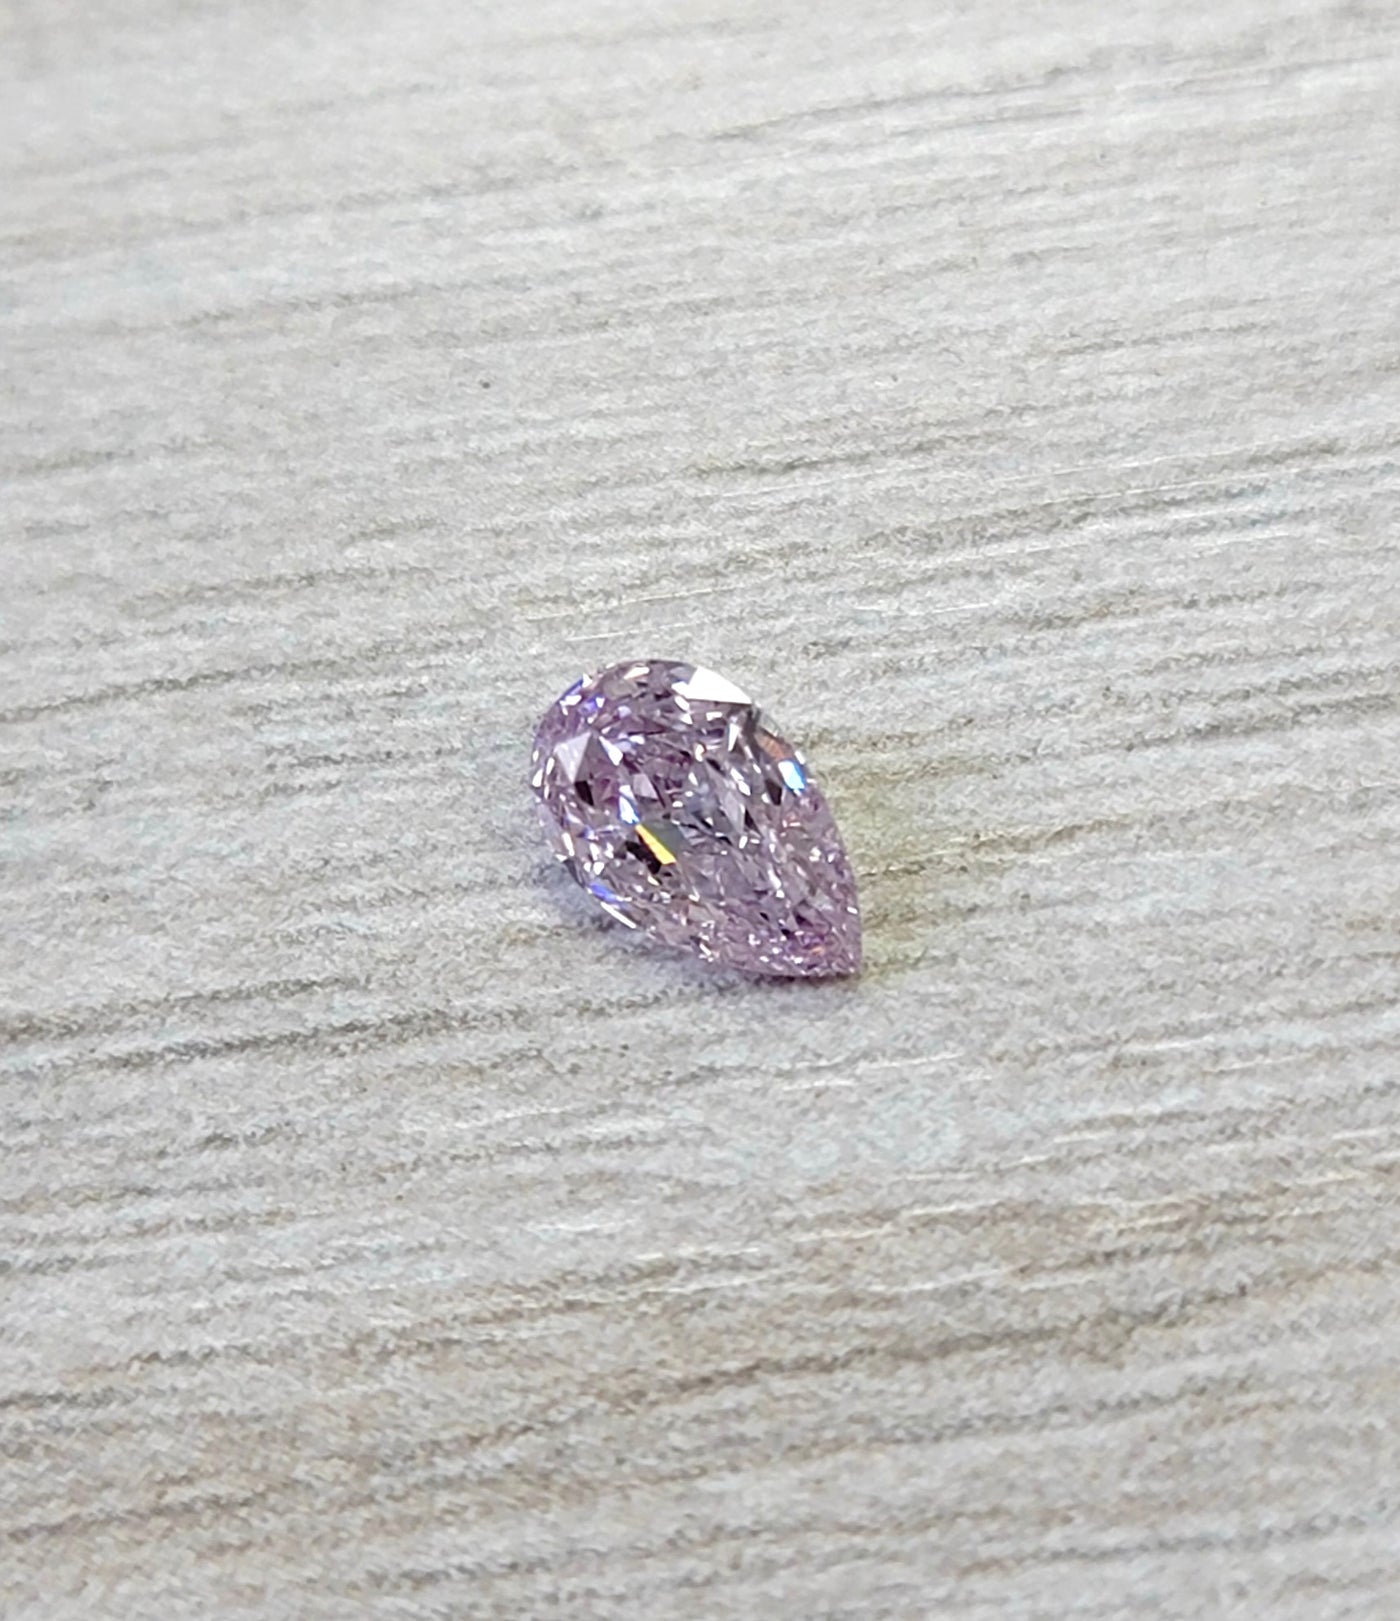 Pink-Purple Diamond Pear Shape